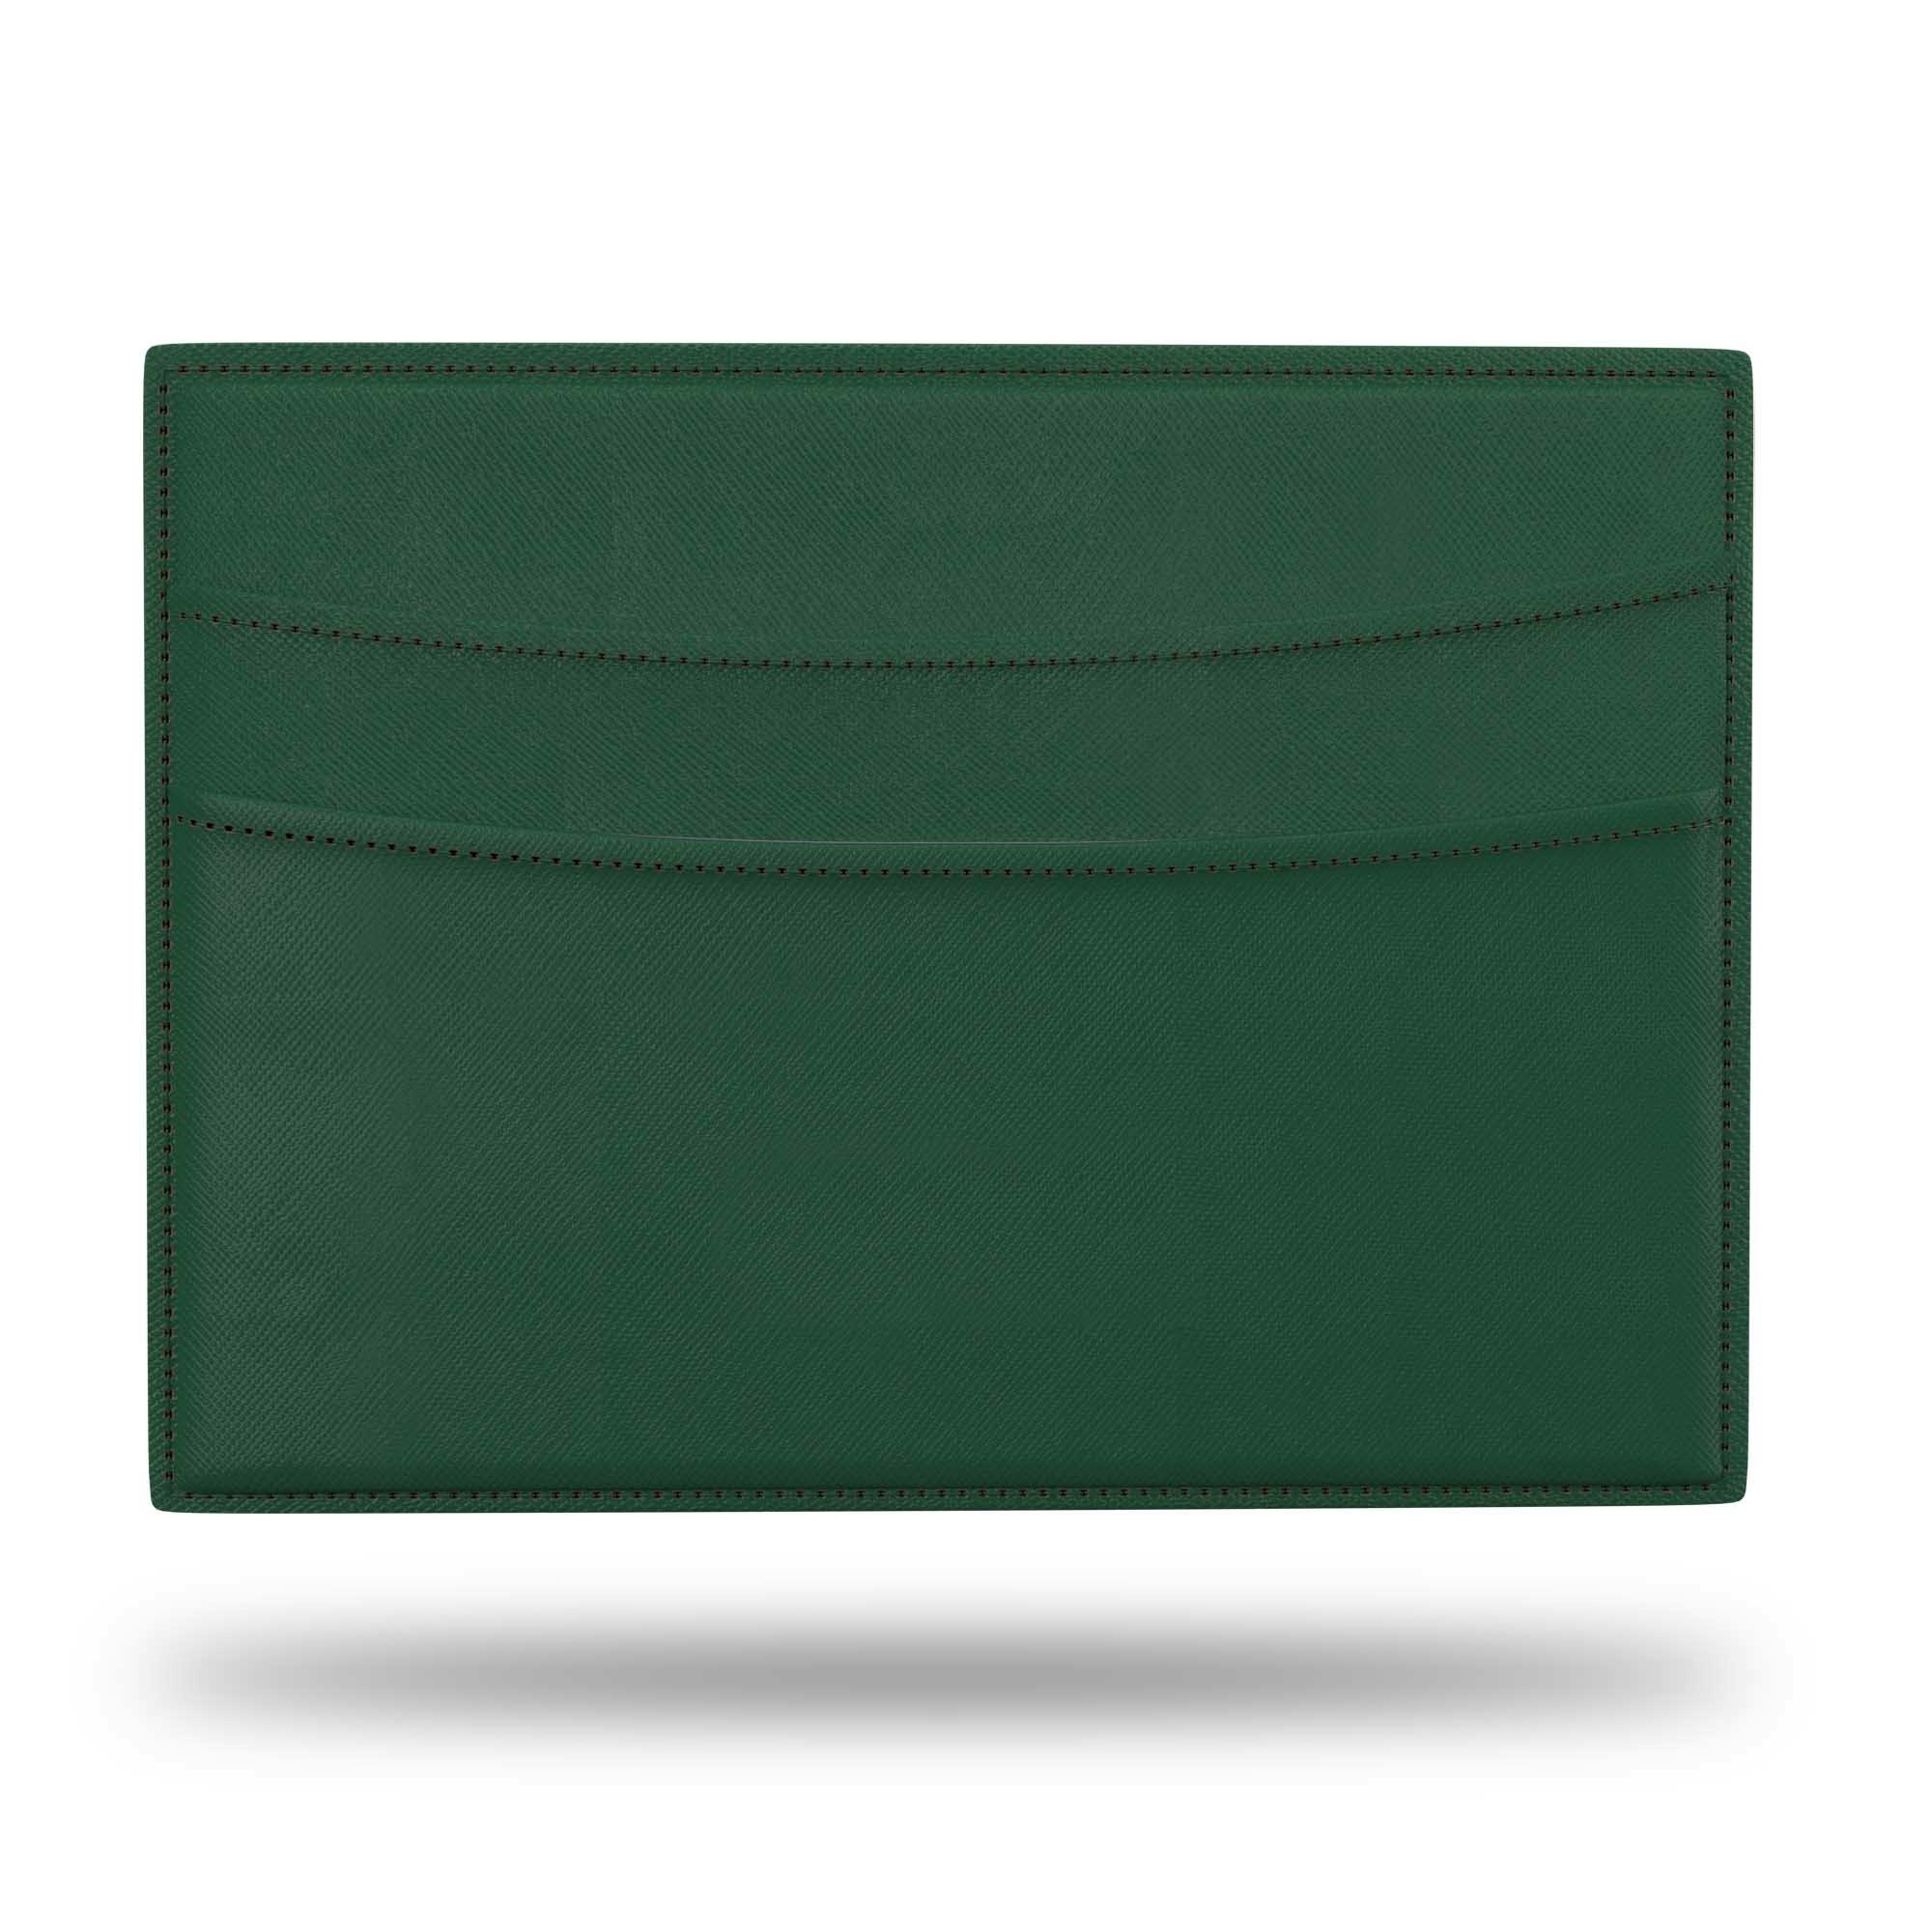 Exklusiv Wriston Korthållare Saffiano Läder - Grön